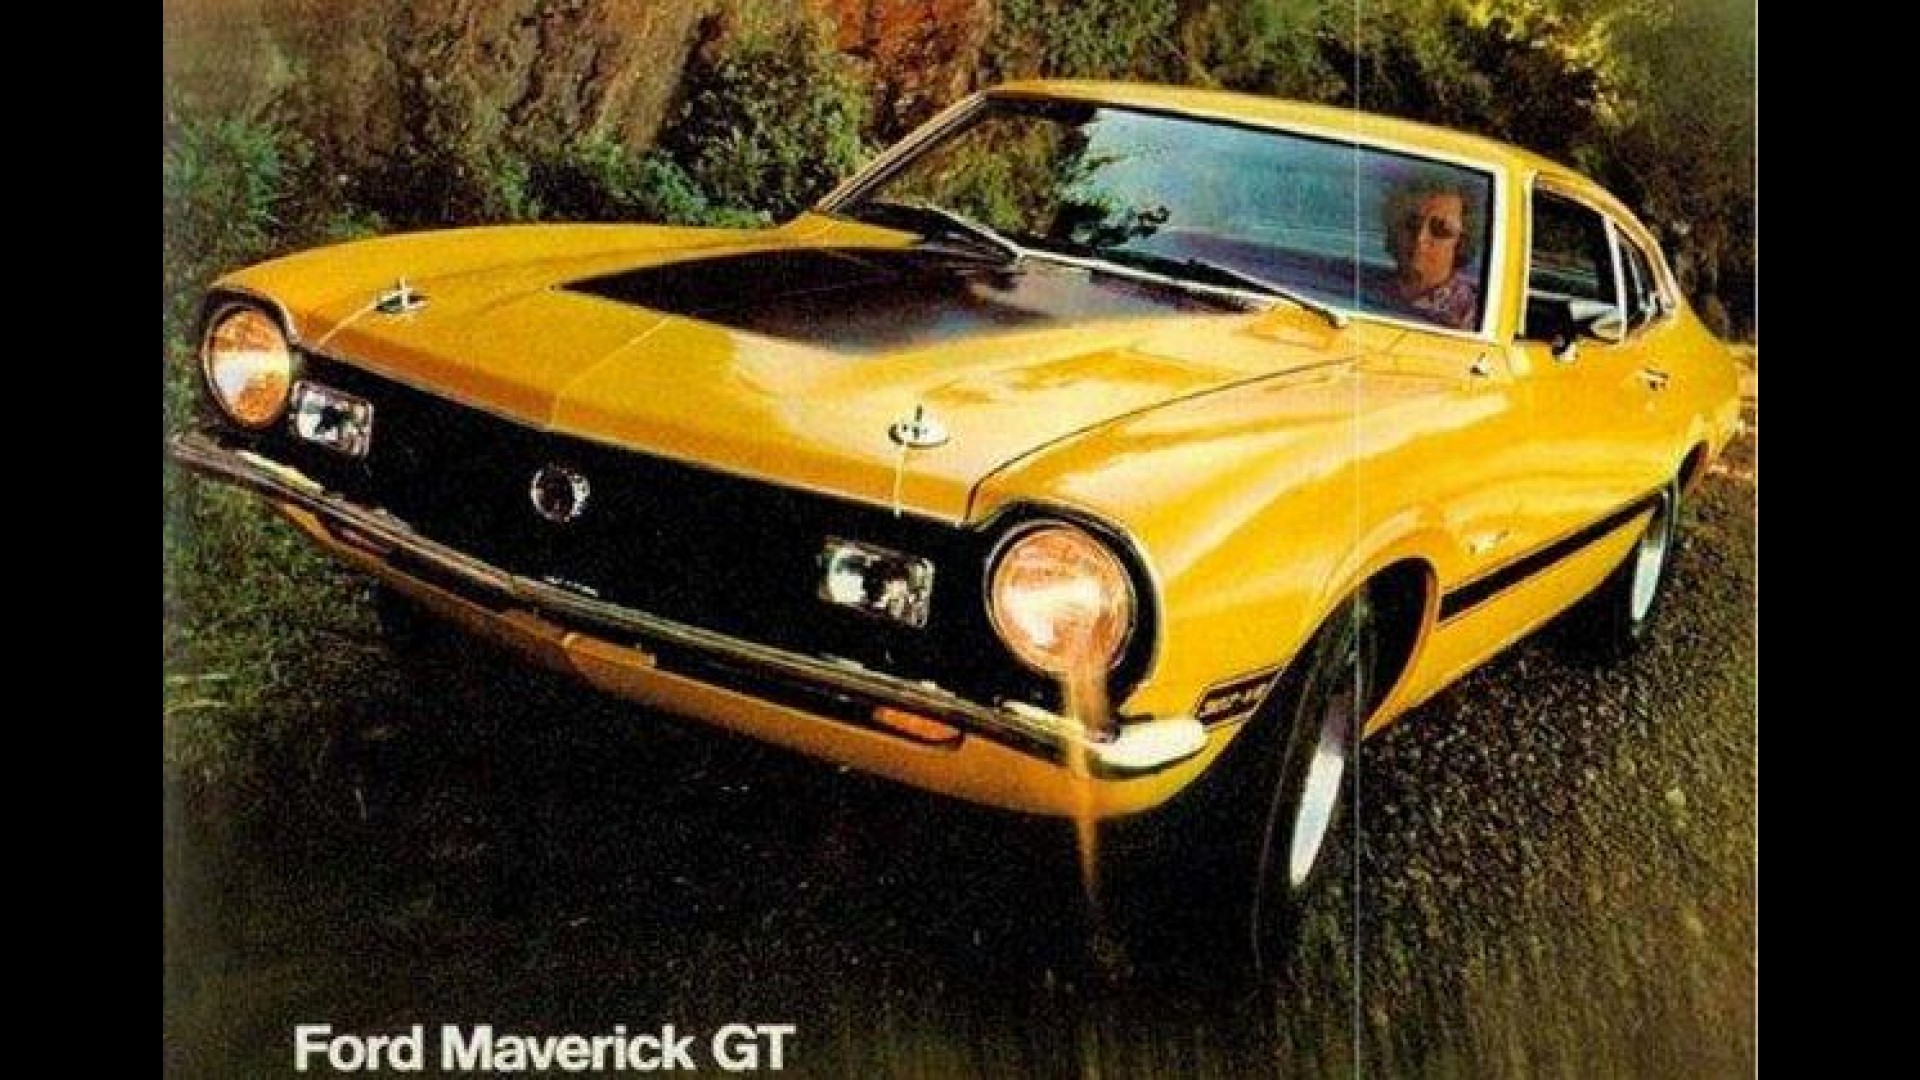 Ford Maverick GT